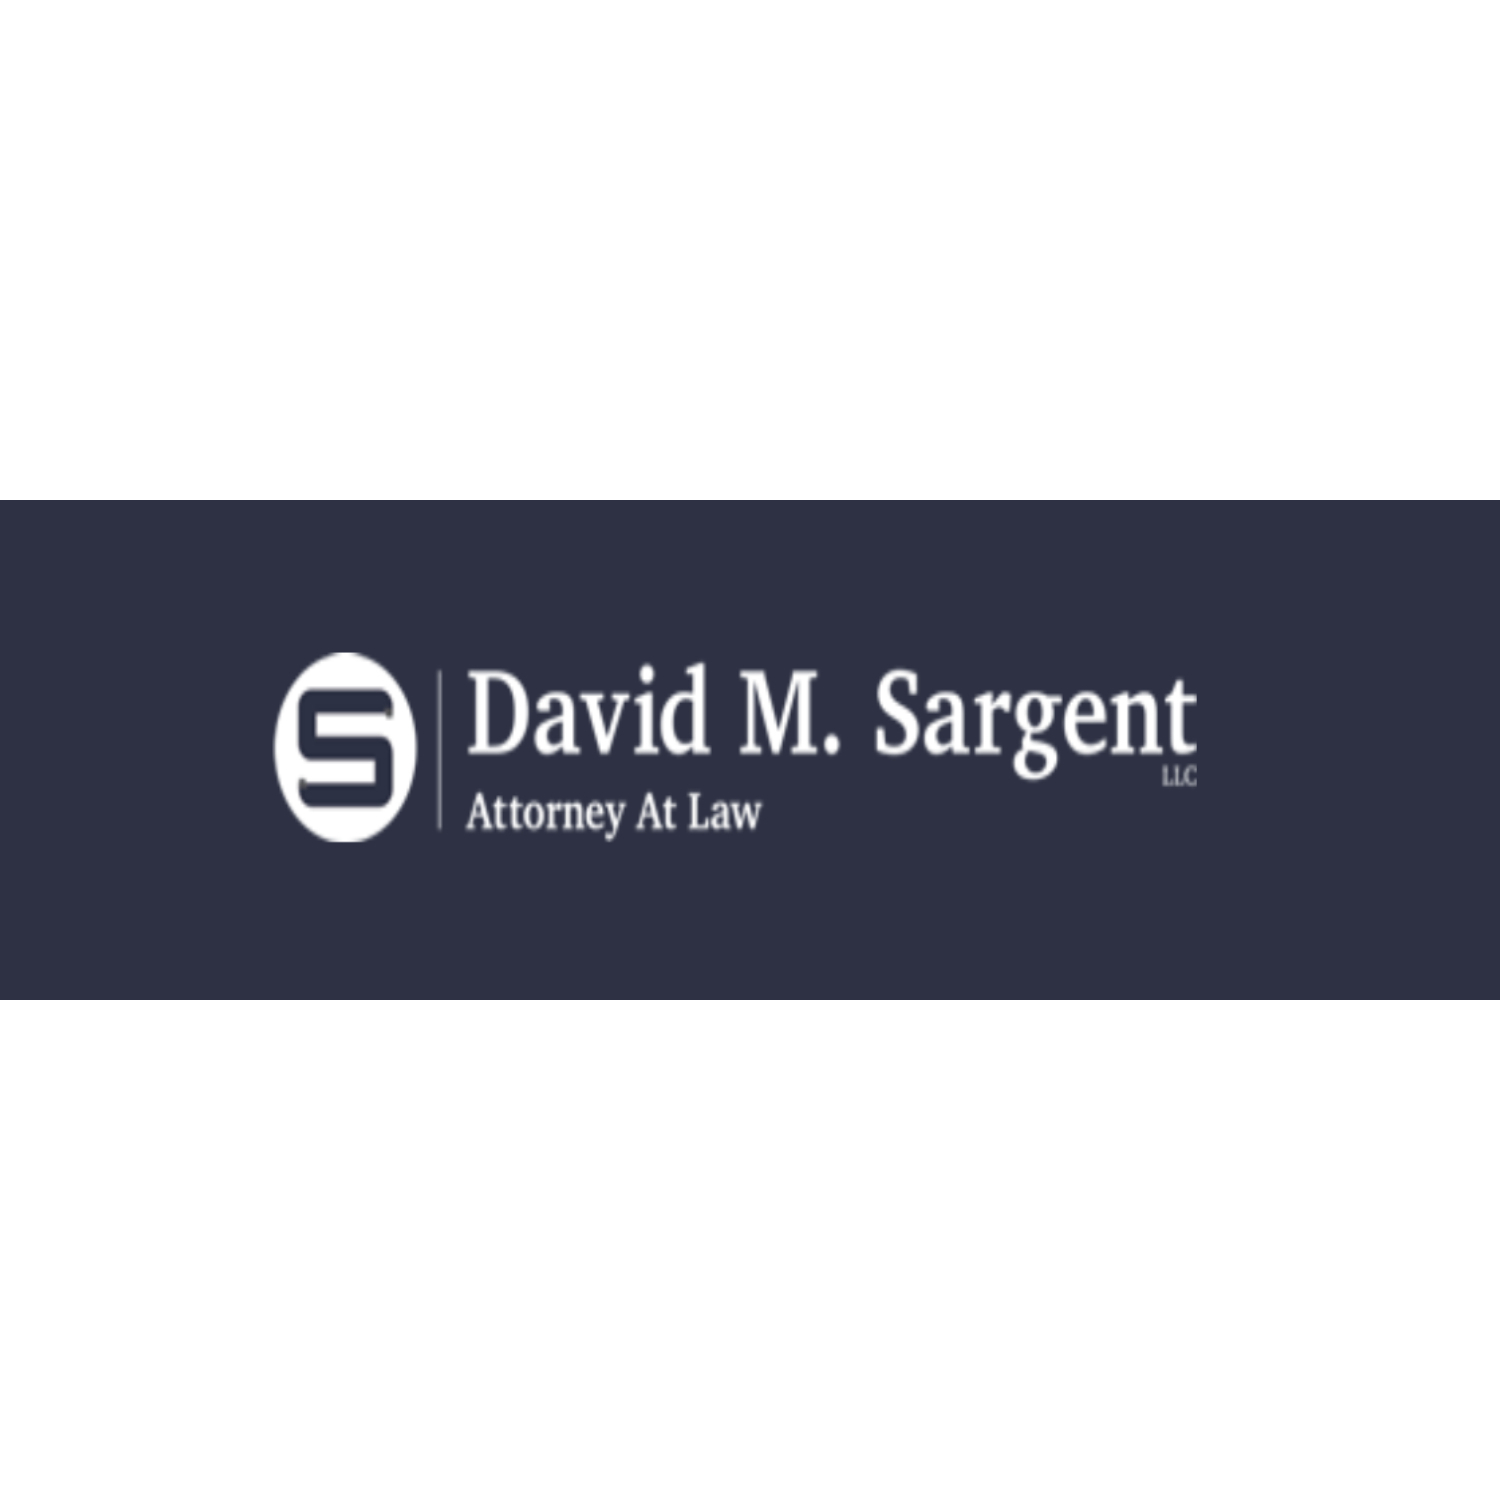 David M. Sargent Attorney At Law Logo